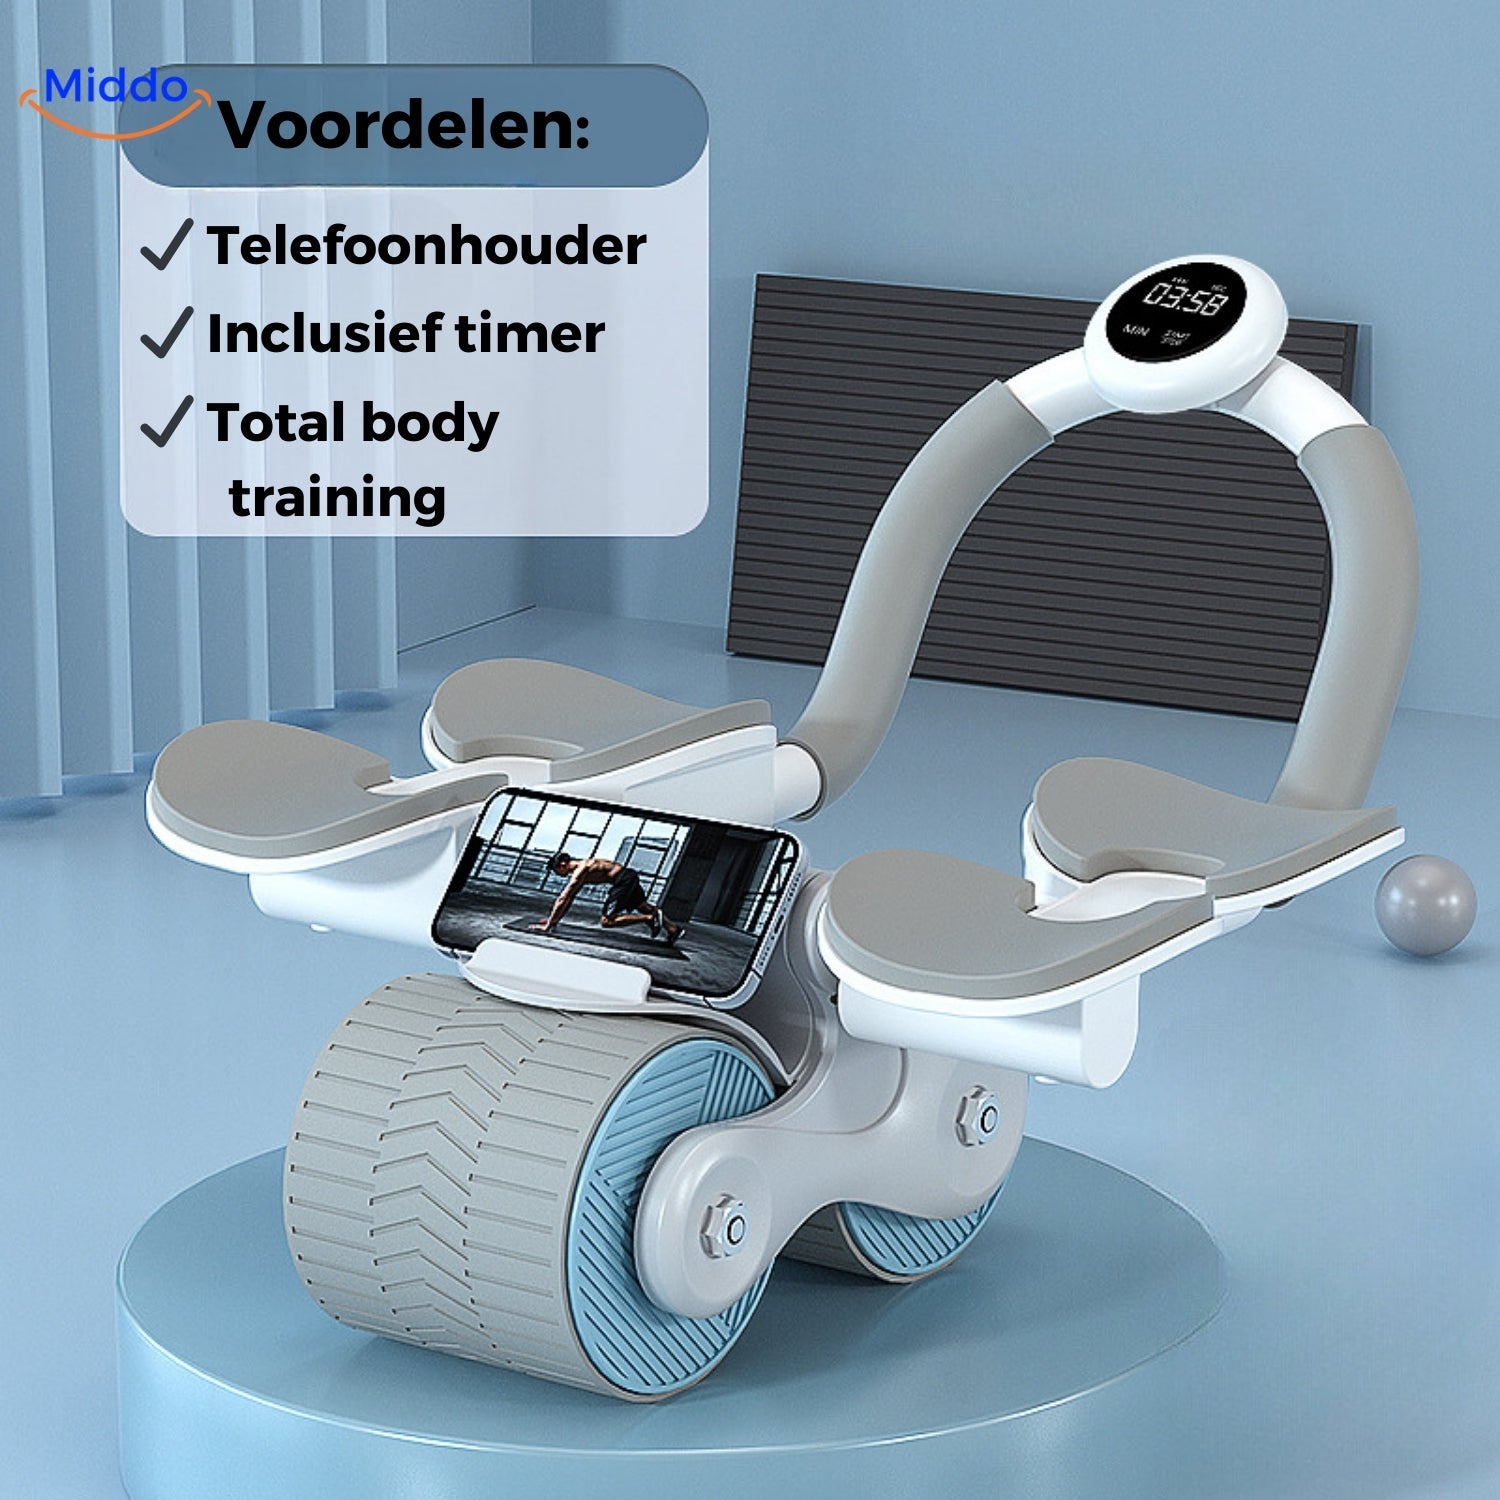 Grijs blauwe Abwheel pro buikspier trainer met telefoonhouder en timer van Middo.nl